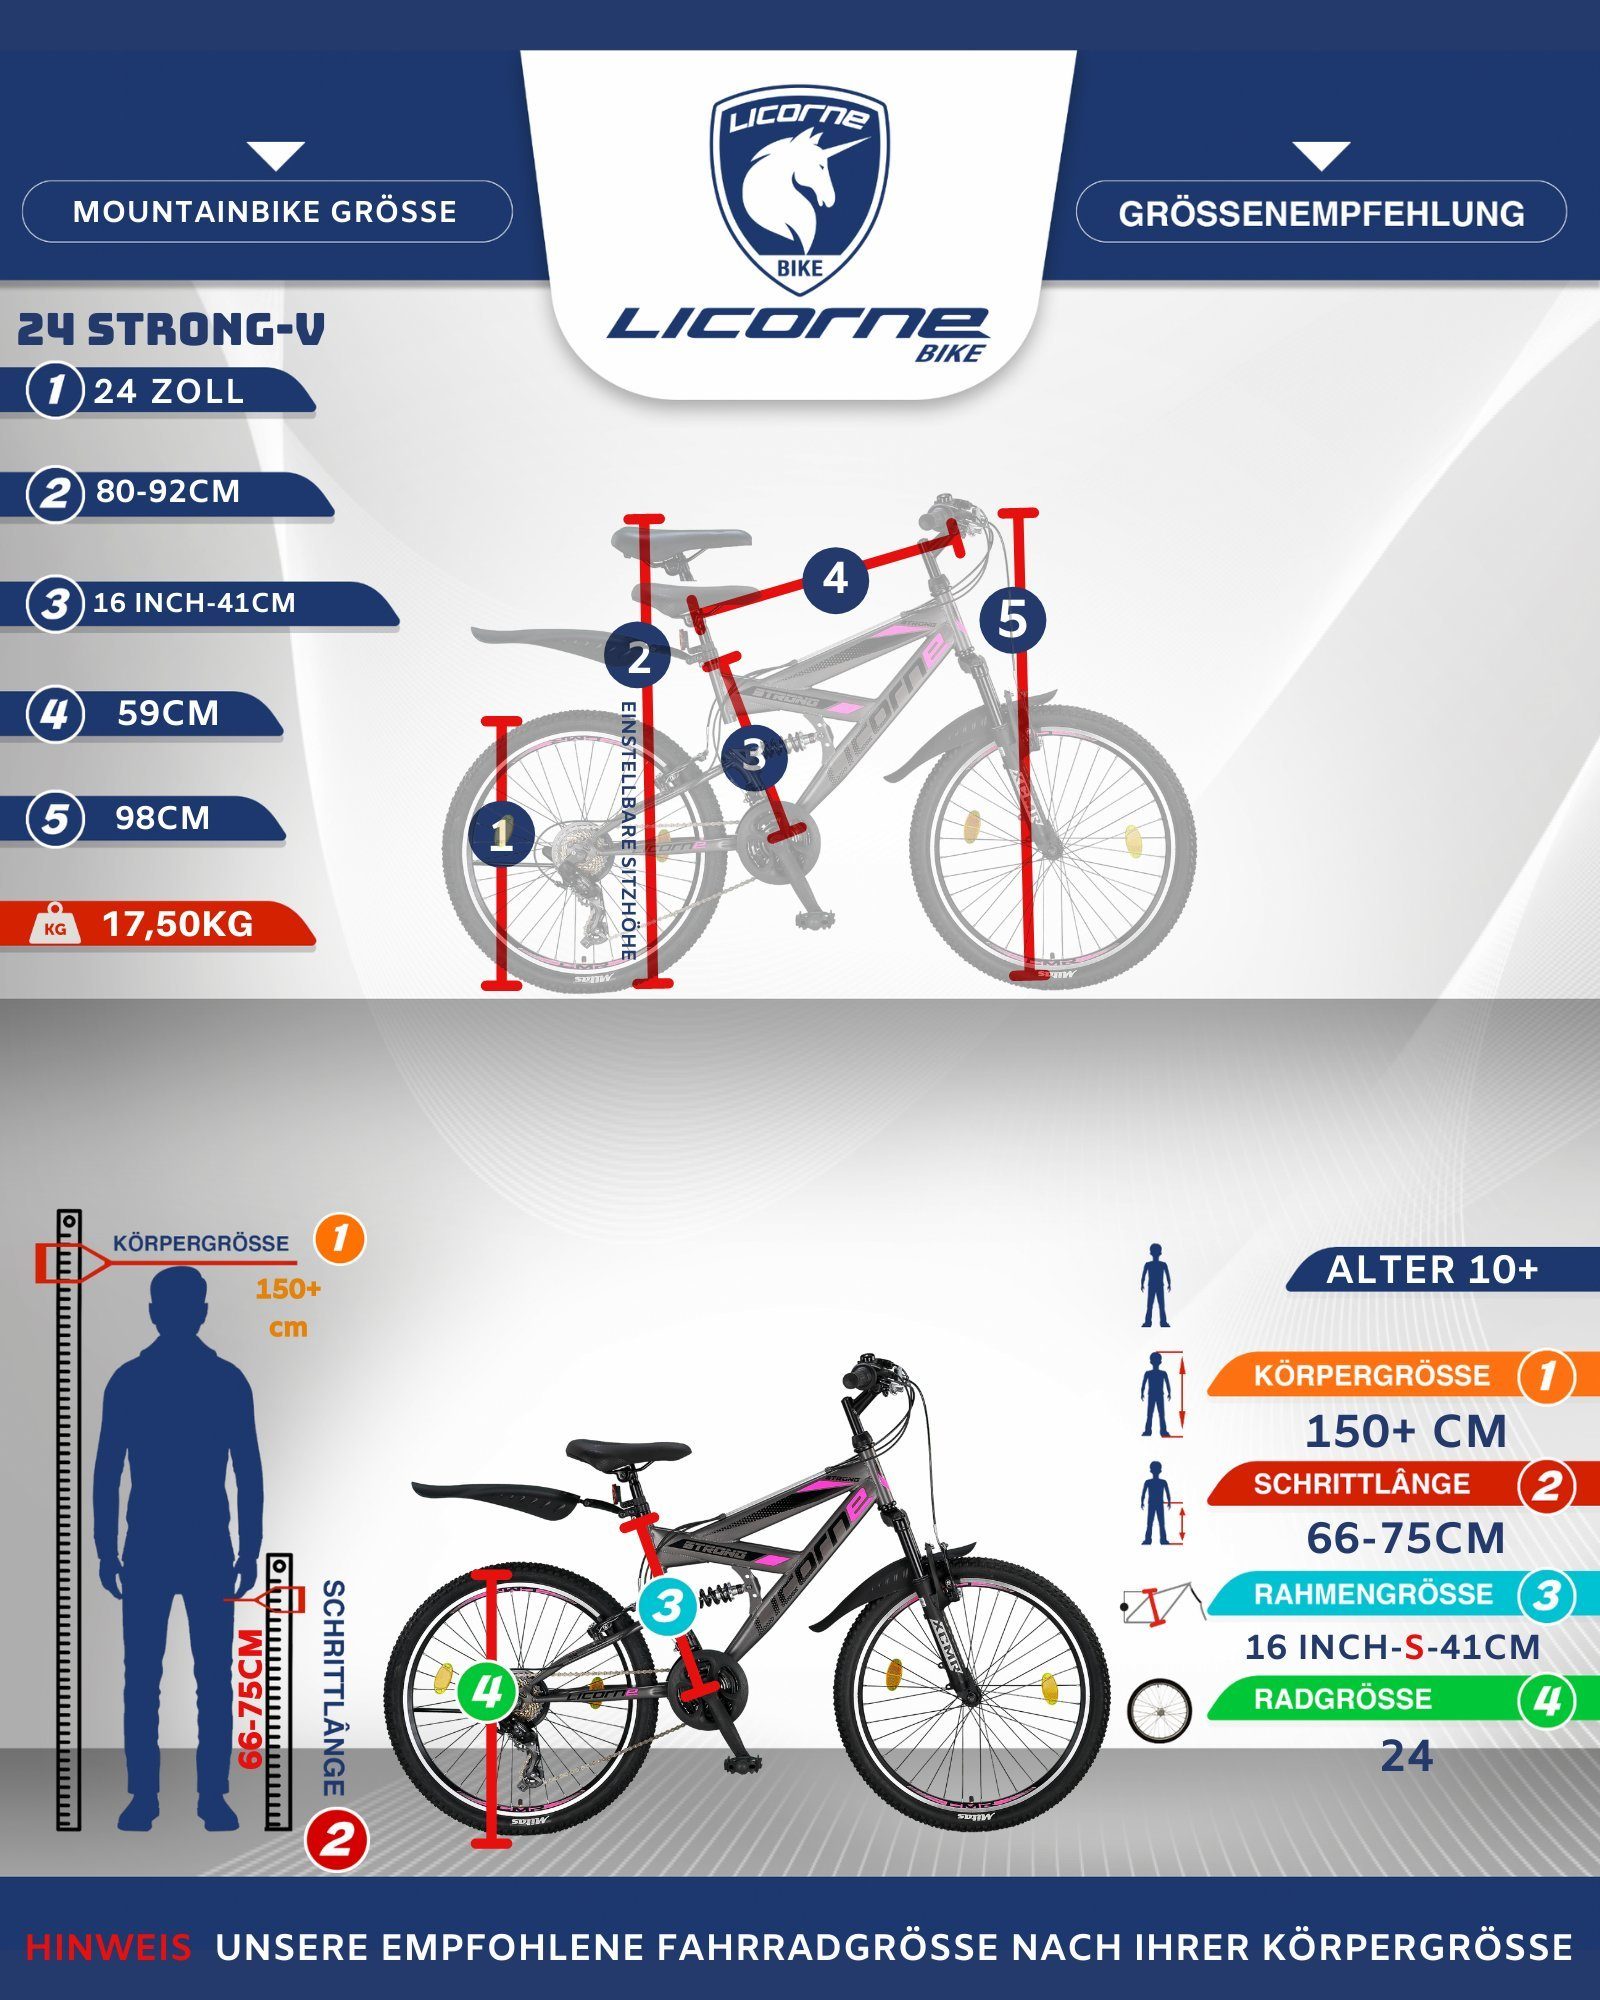 Bike Mountainbike 26 Premium Licorne 24 21 Licorne in und Zoll, V Bike Anthrazit/Rosa Gang Mountainbike Strong